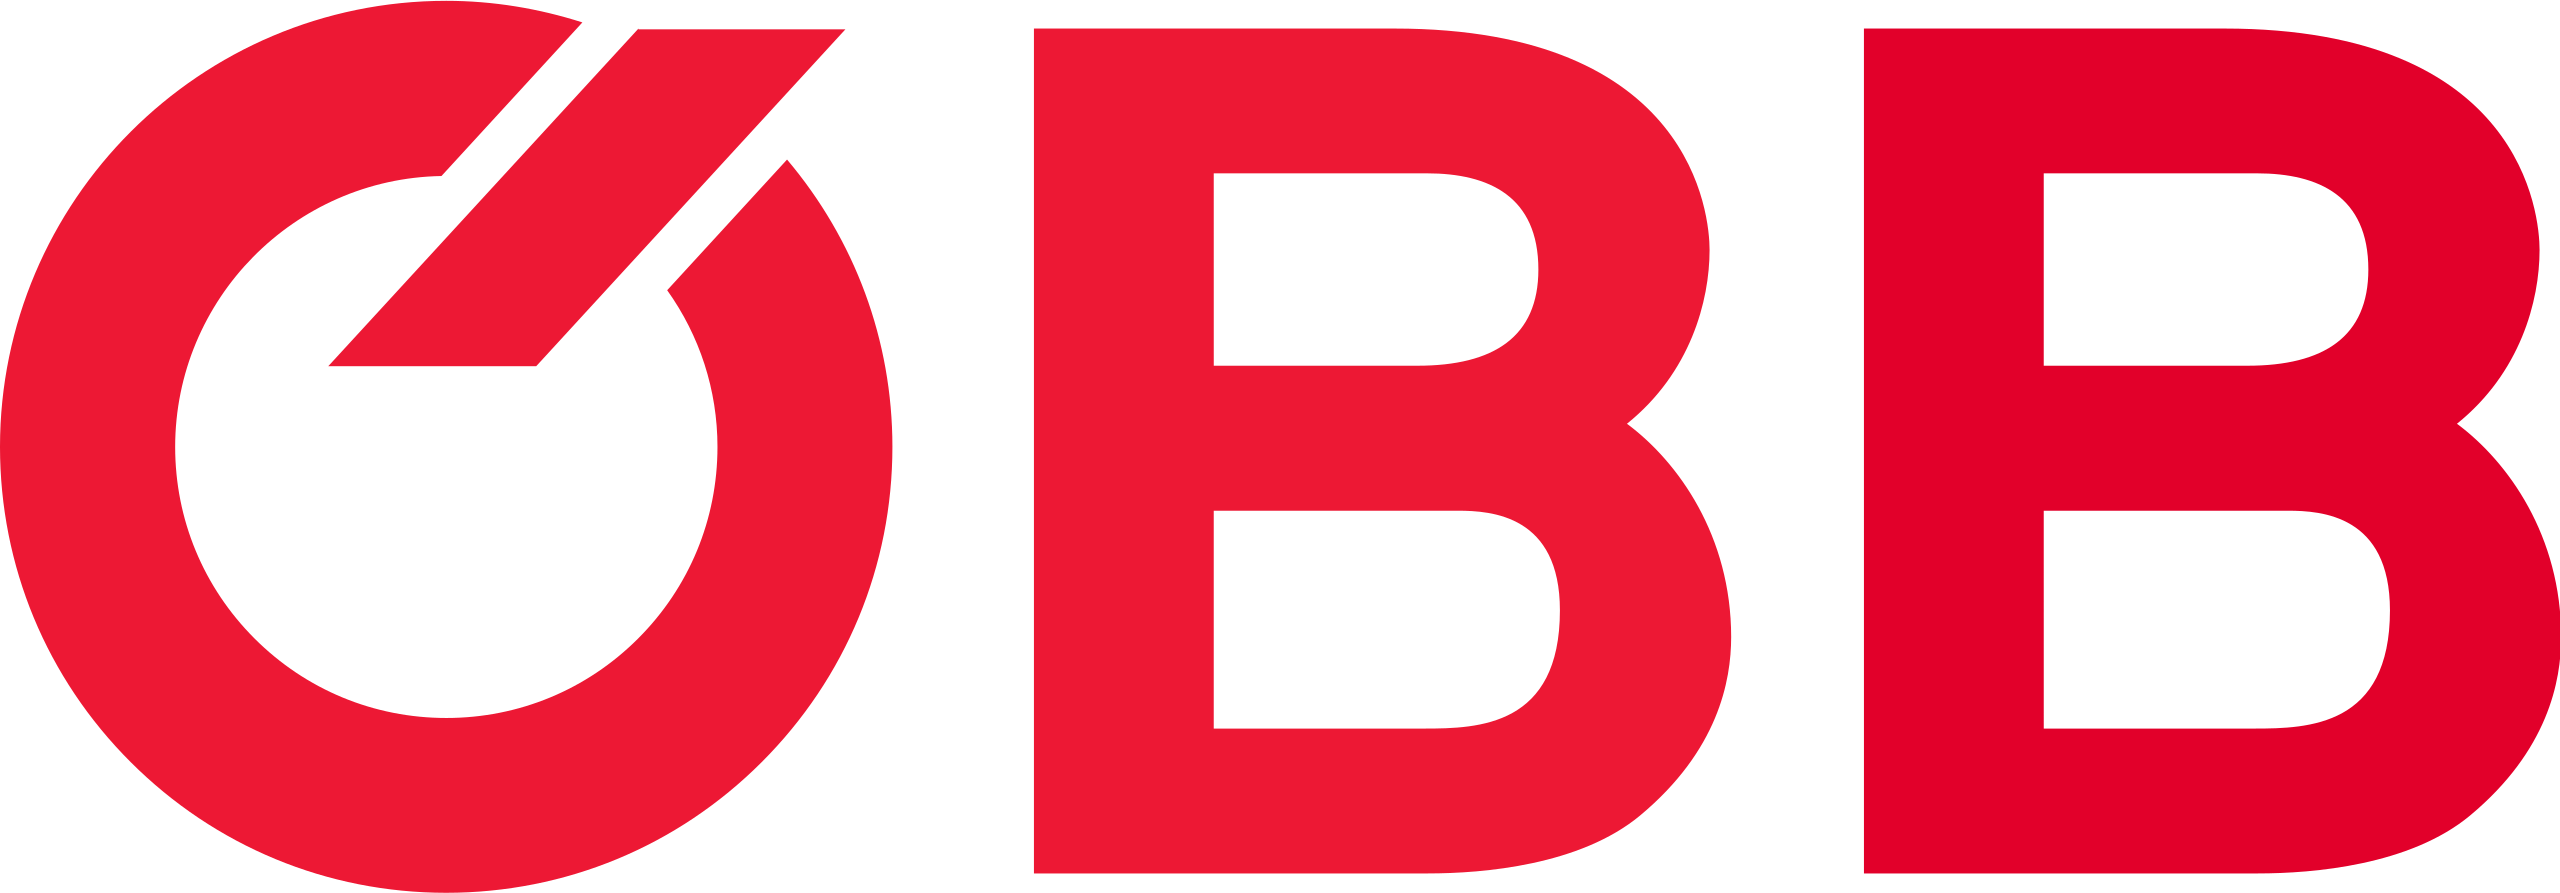 logo_oebb